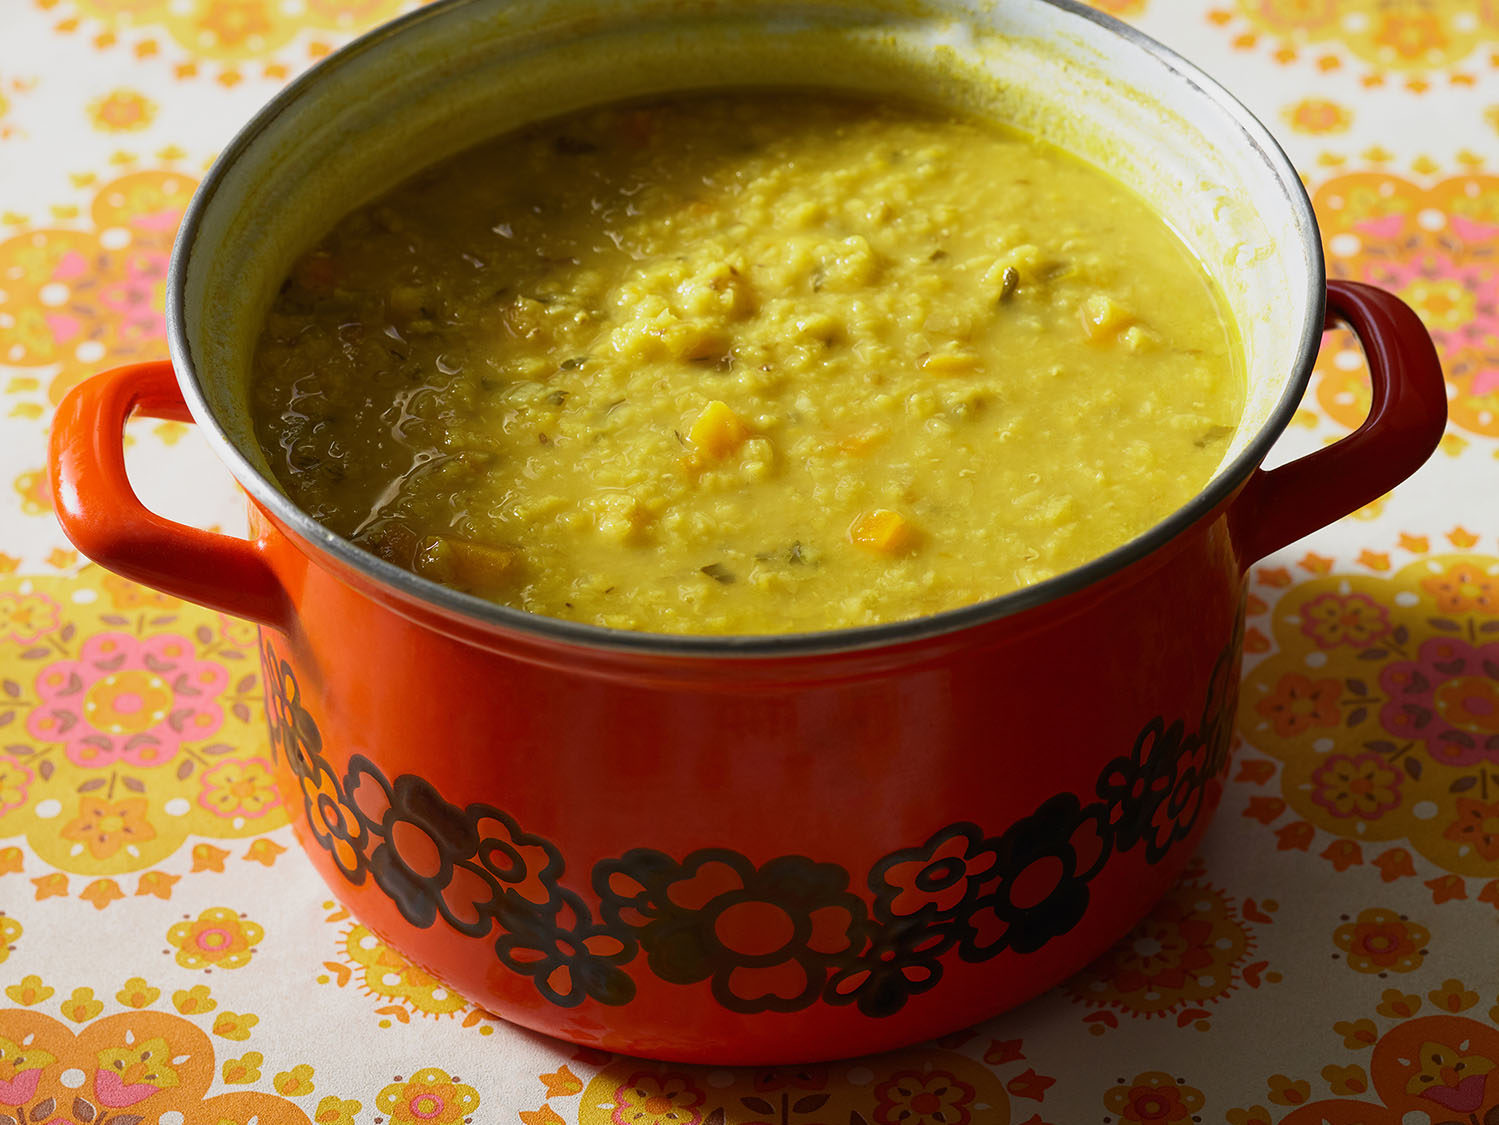 Arab lentil soup in a vintage orange pot atop a flowered tablecloth